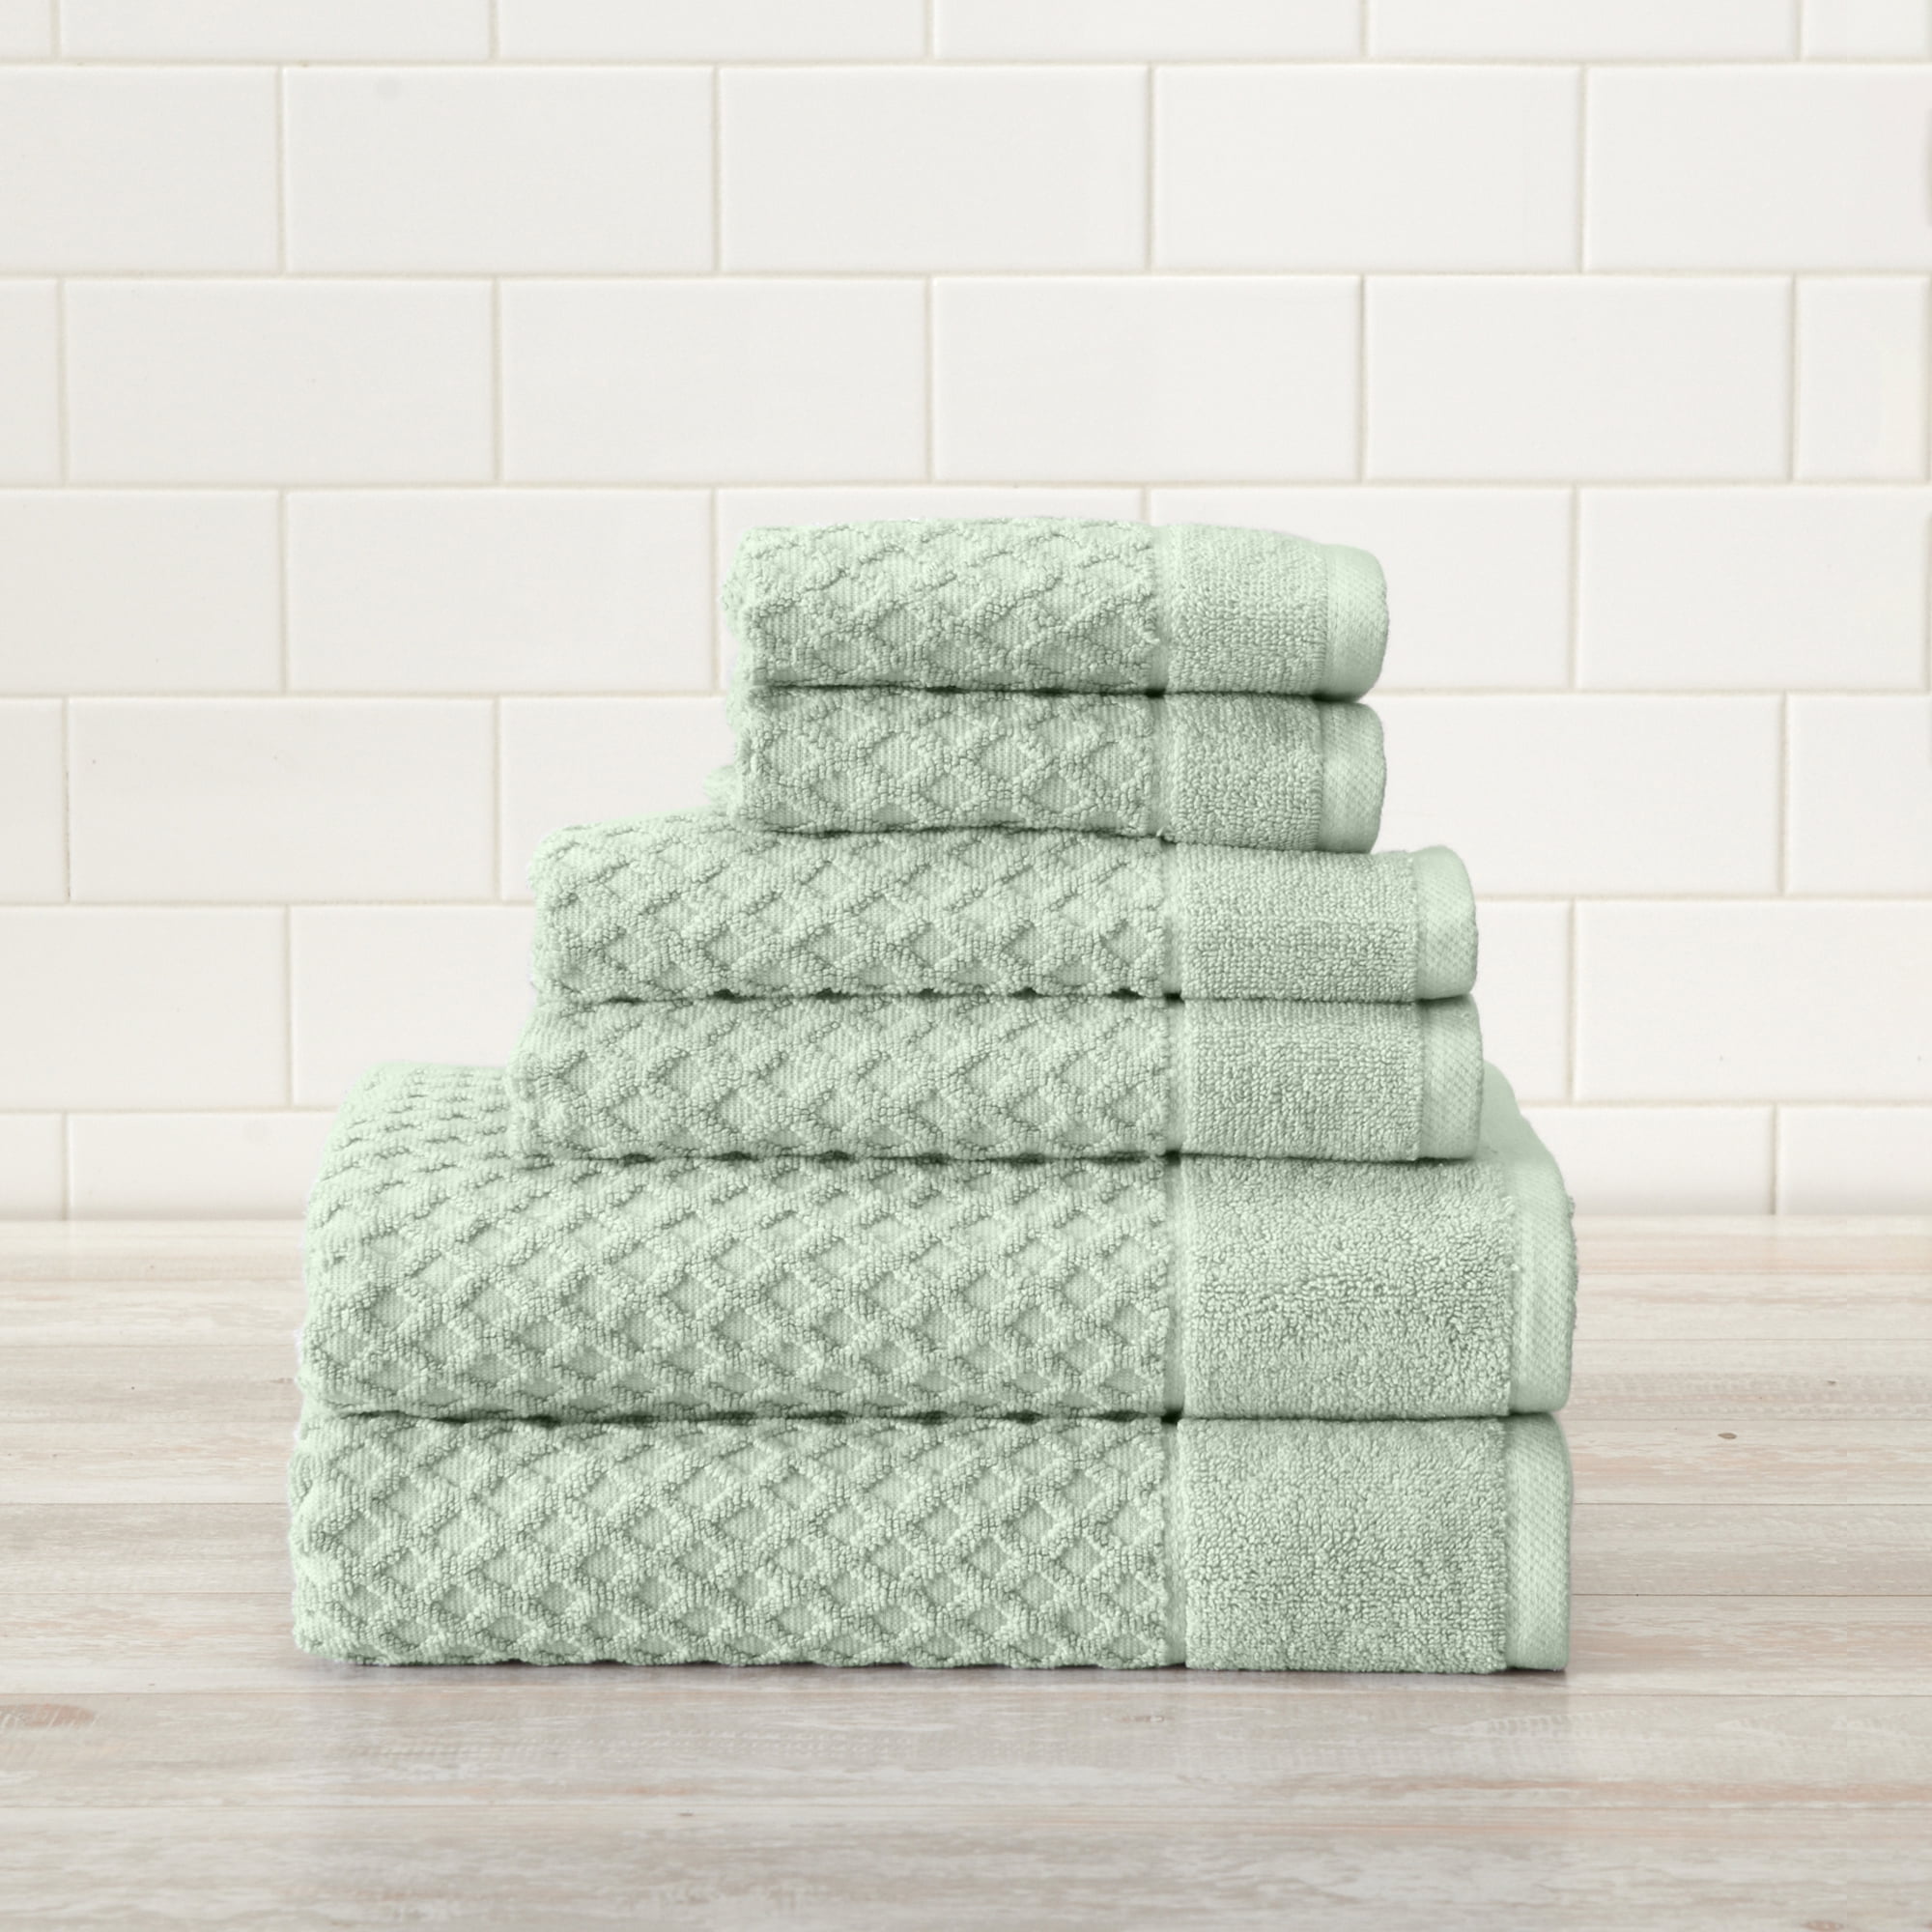 100% cotton 450 GSM 6 pcs Towel Set Jacquard Pattern Light Weight Lint free 